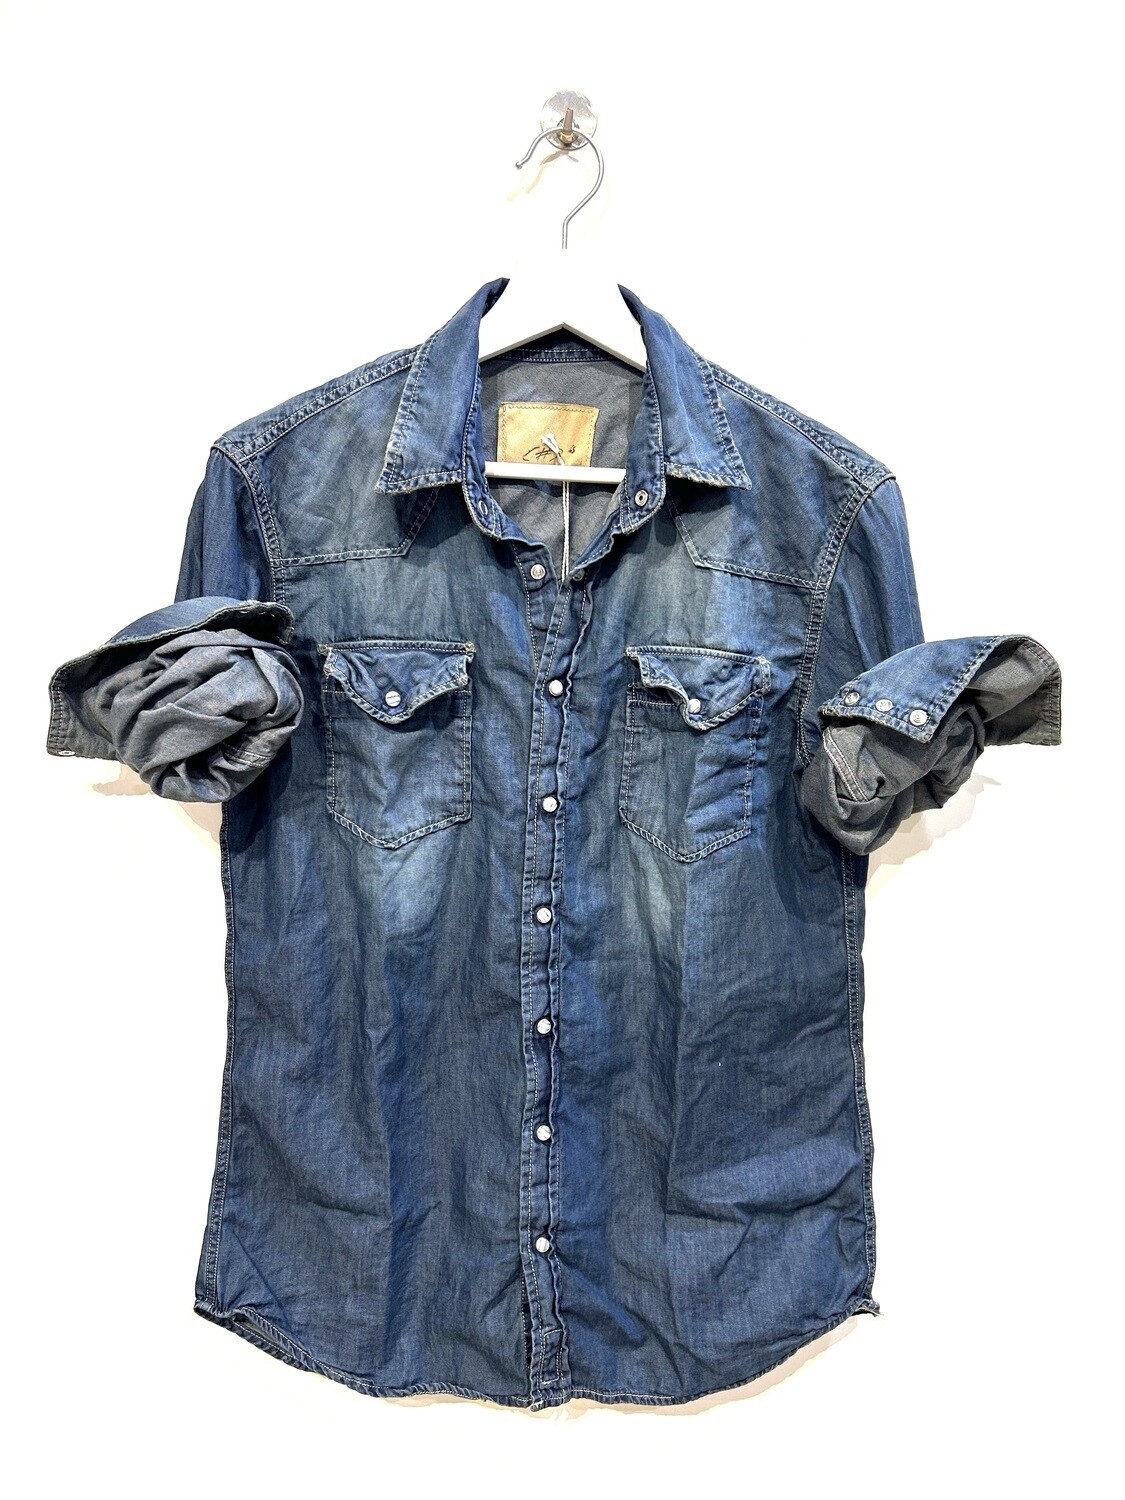 Camicia texana in jeans effetto vintage. Col. Bleu Scuro